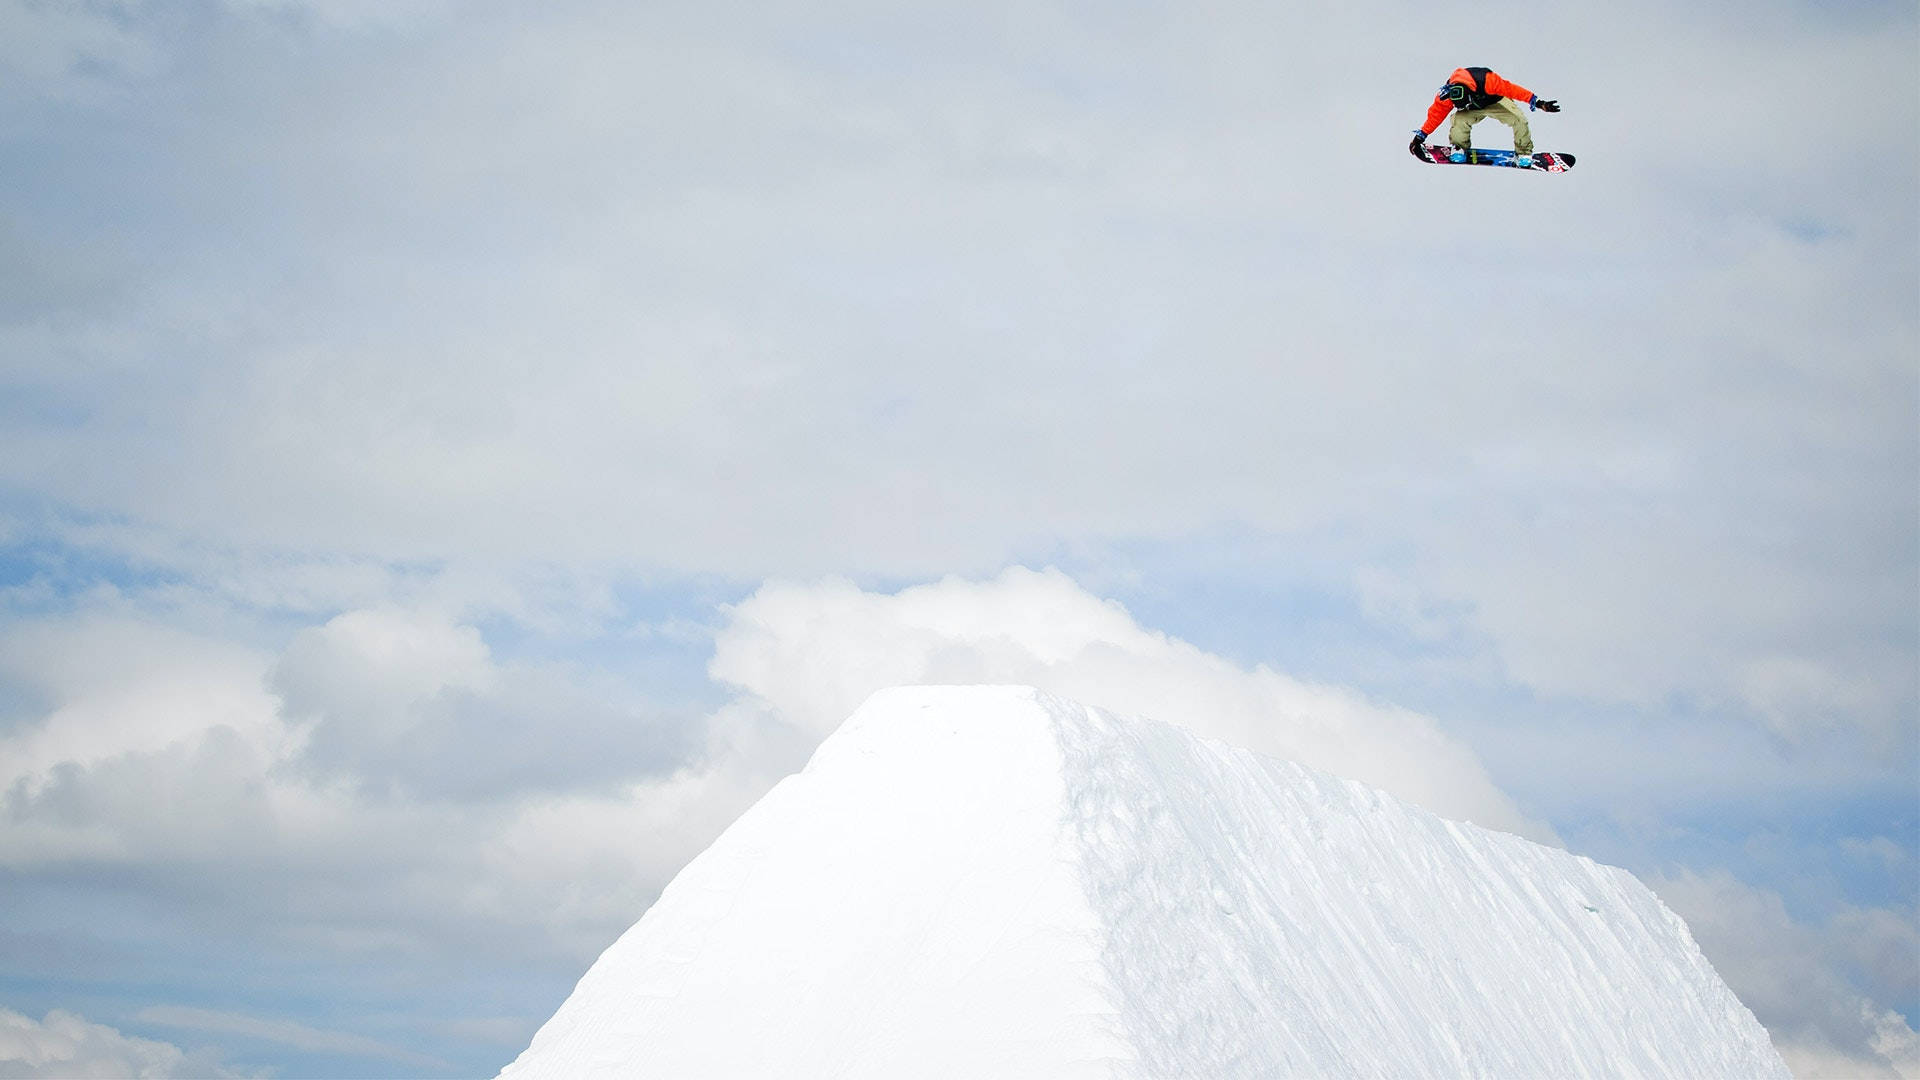 Snowboarding In The Sky Wallpaper